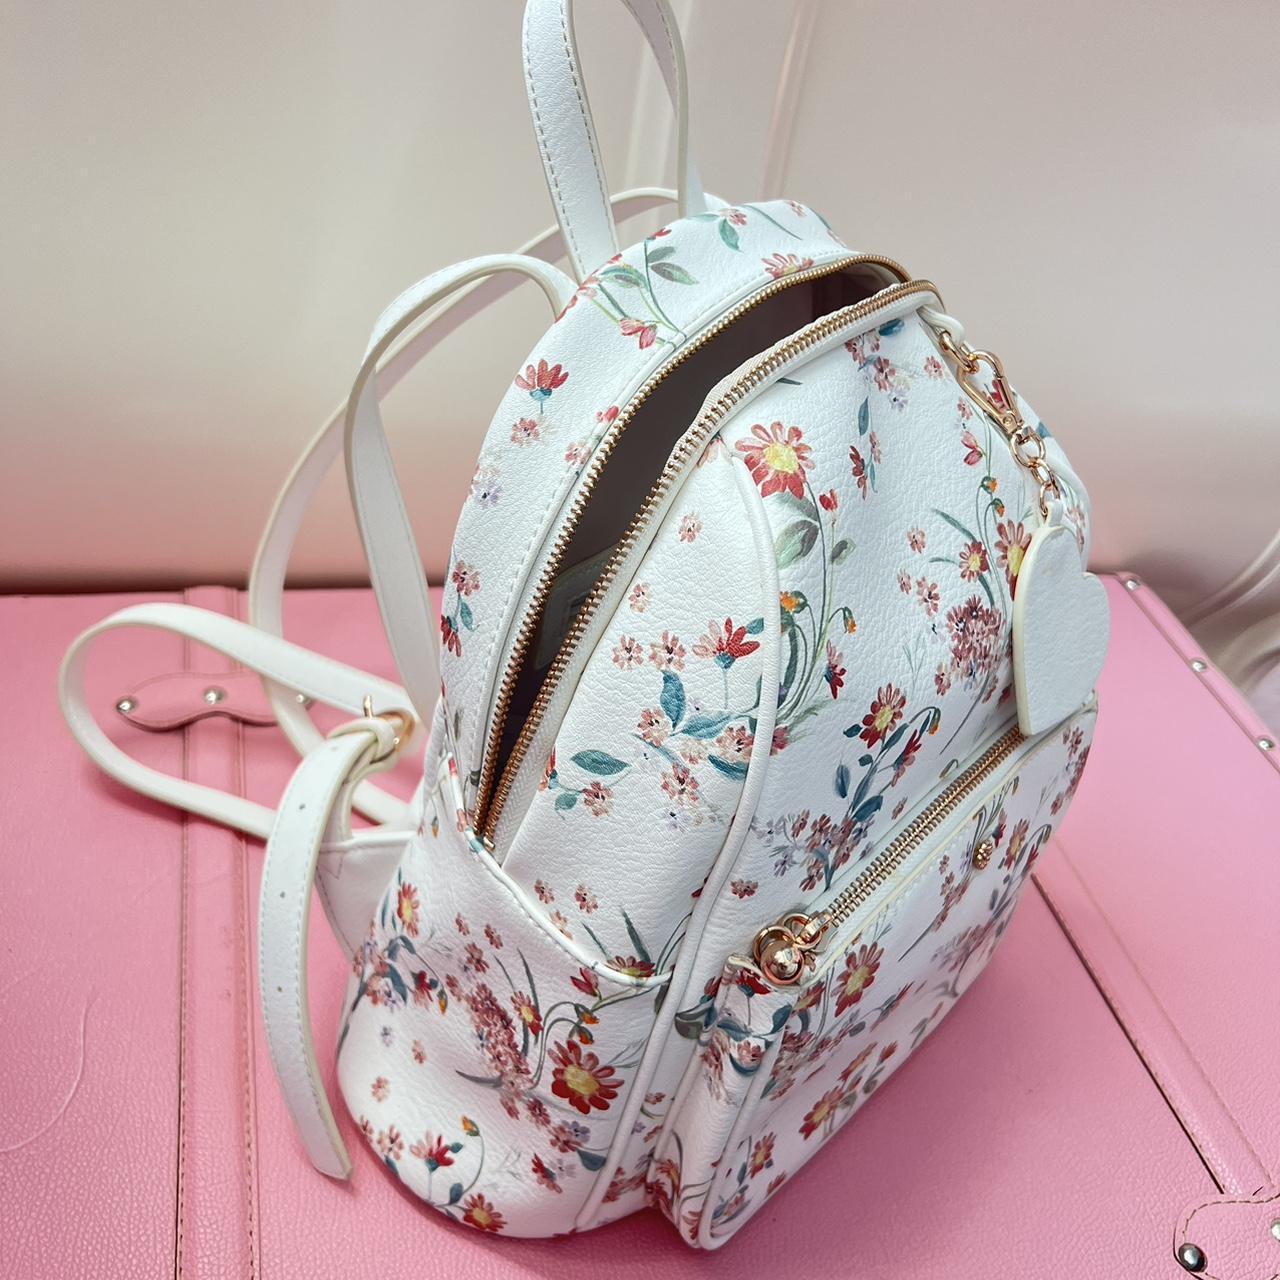 floral lauren conrad mini backpack w/ heart charm - Depop